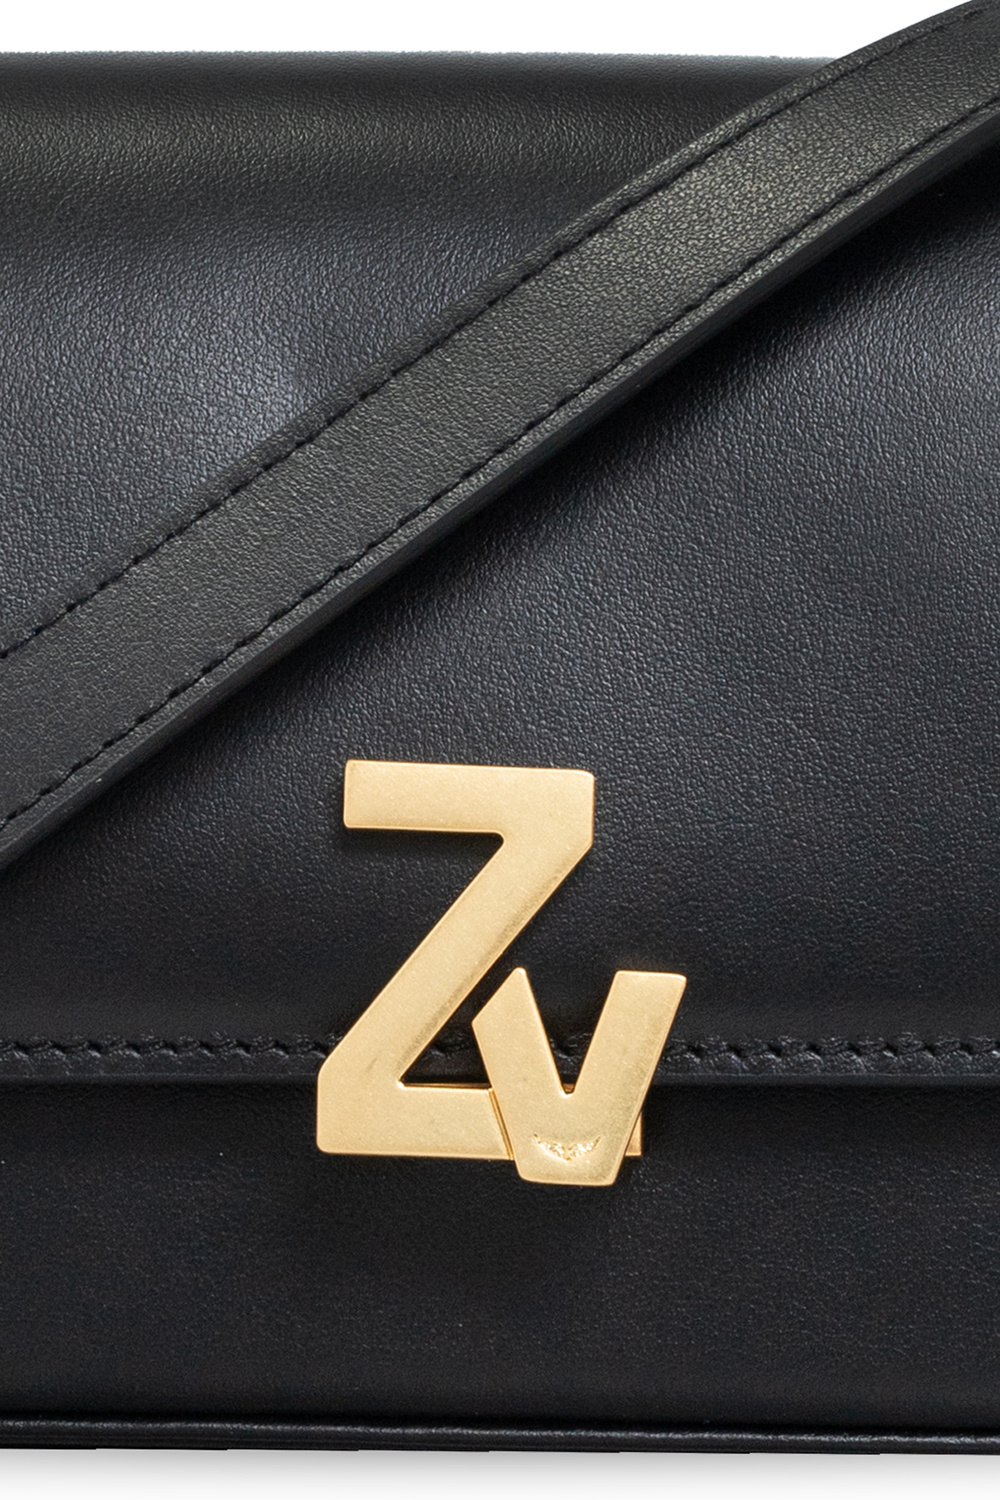 Louis Vuitton Comes Up Short in Logo Suit Against Zadig & Voltaire